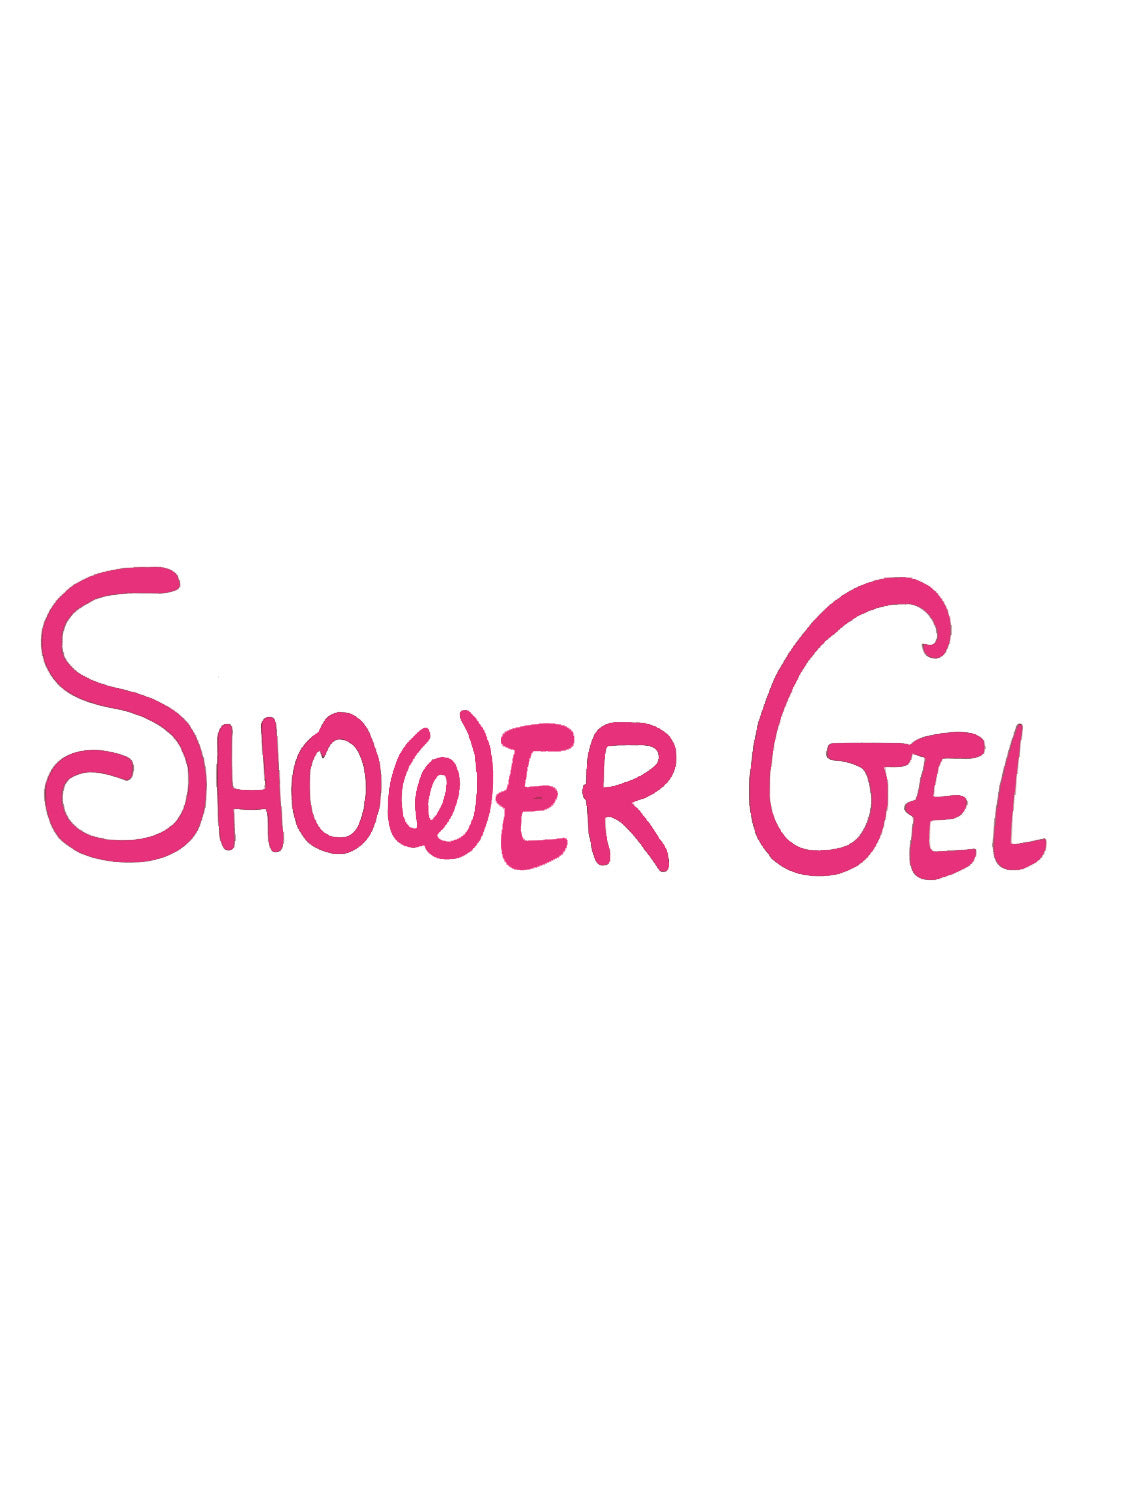 Shower Gel Bathroom Decal - A Vinyl Sticker Decal